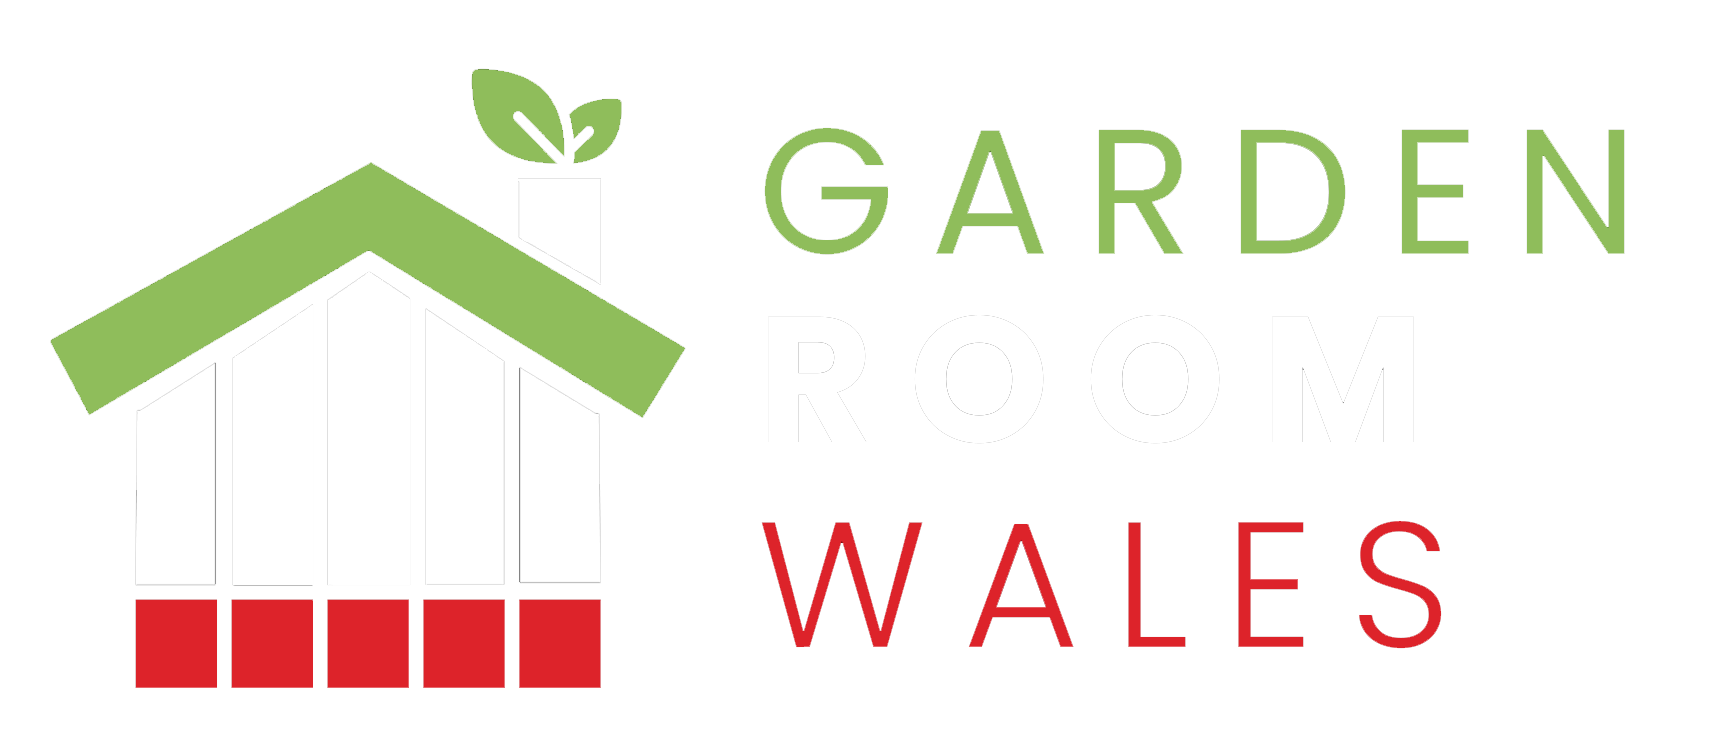 Garden Rooms Wales Graphic